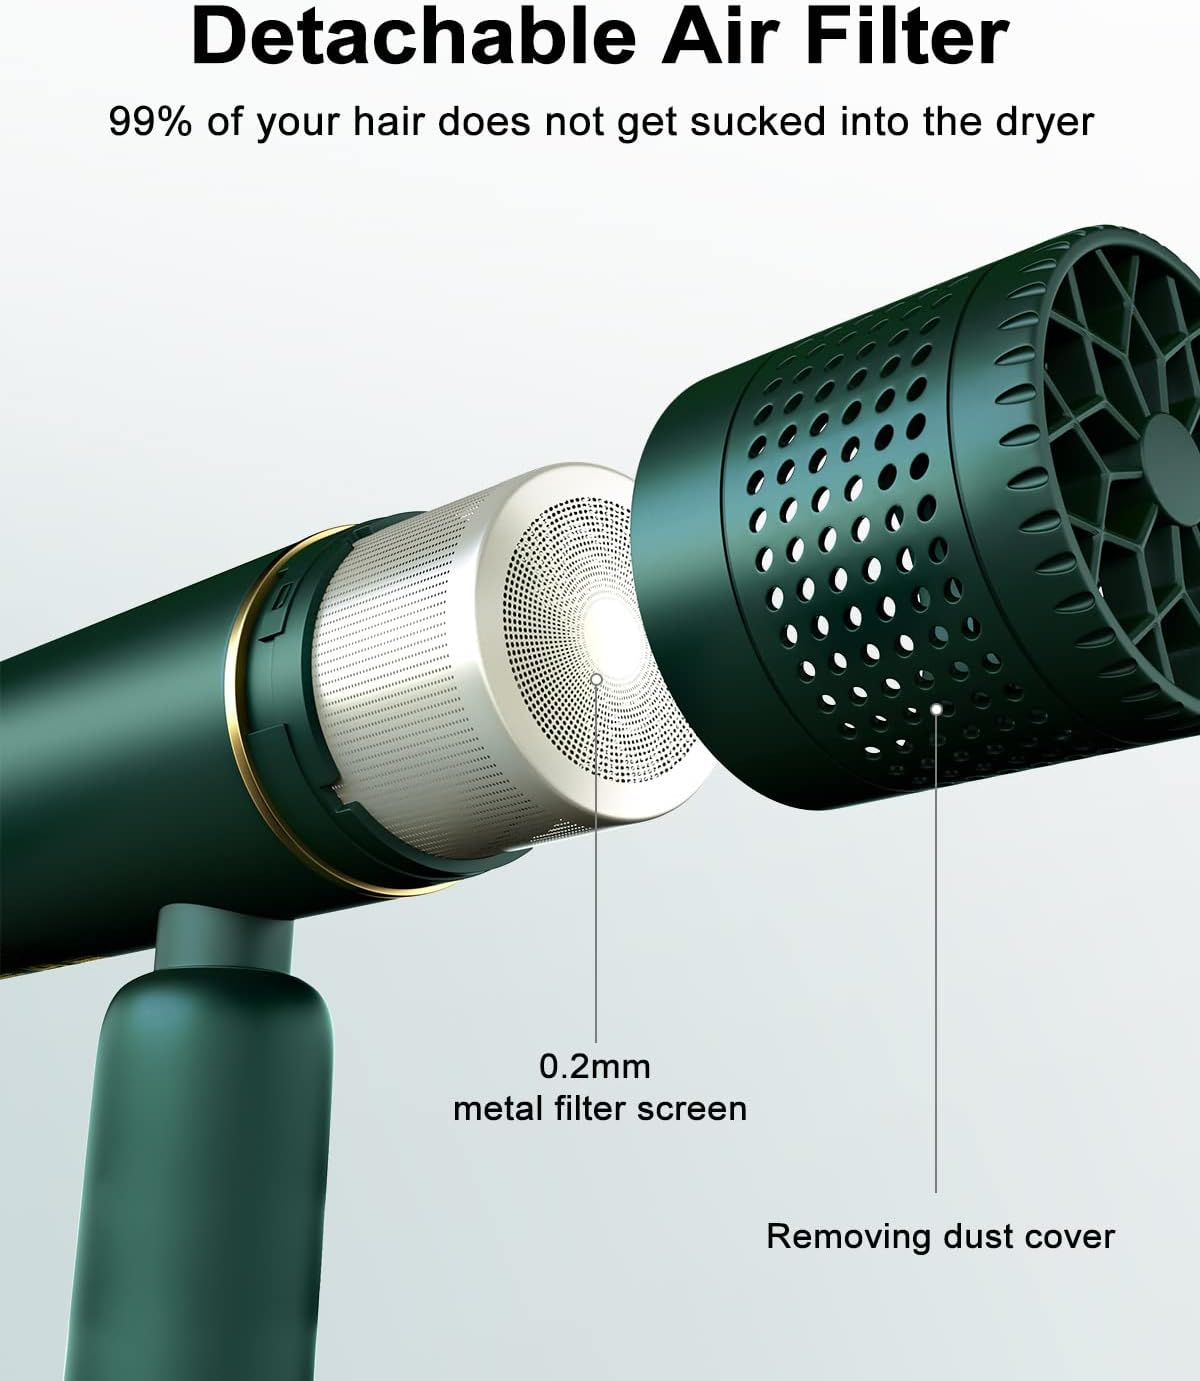 7MAGIC Fast-Drying Hair Dryer Green